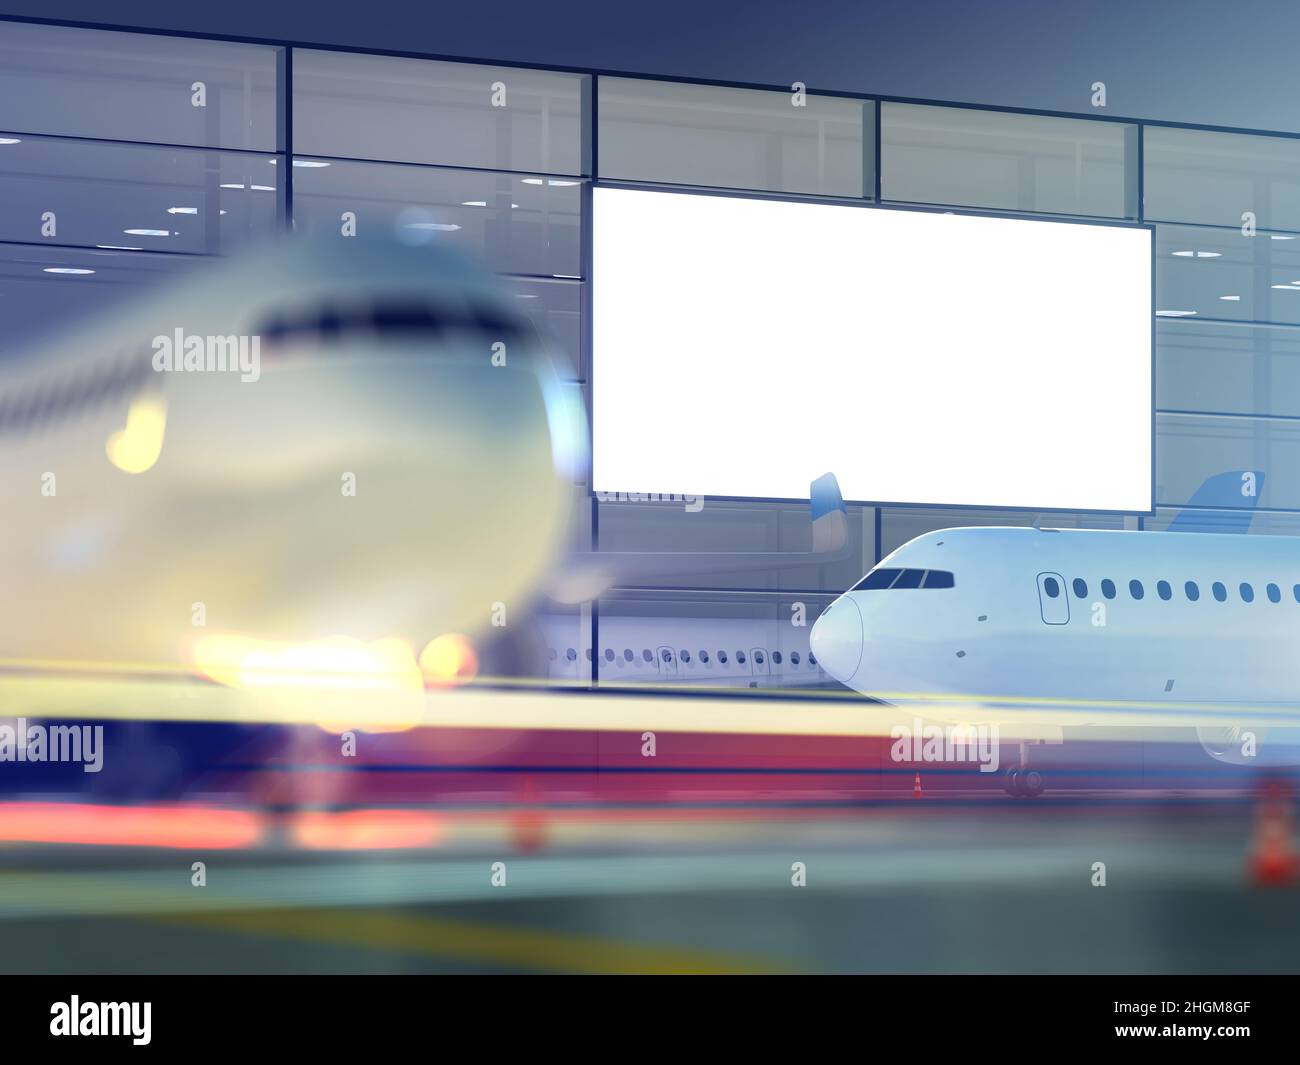 Aviation advertising, illustration Stock Photo